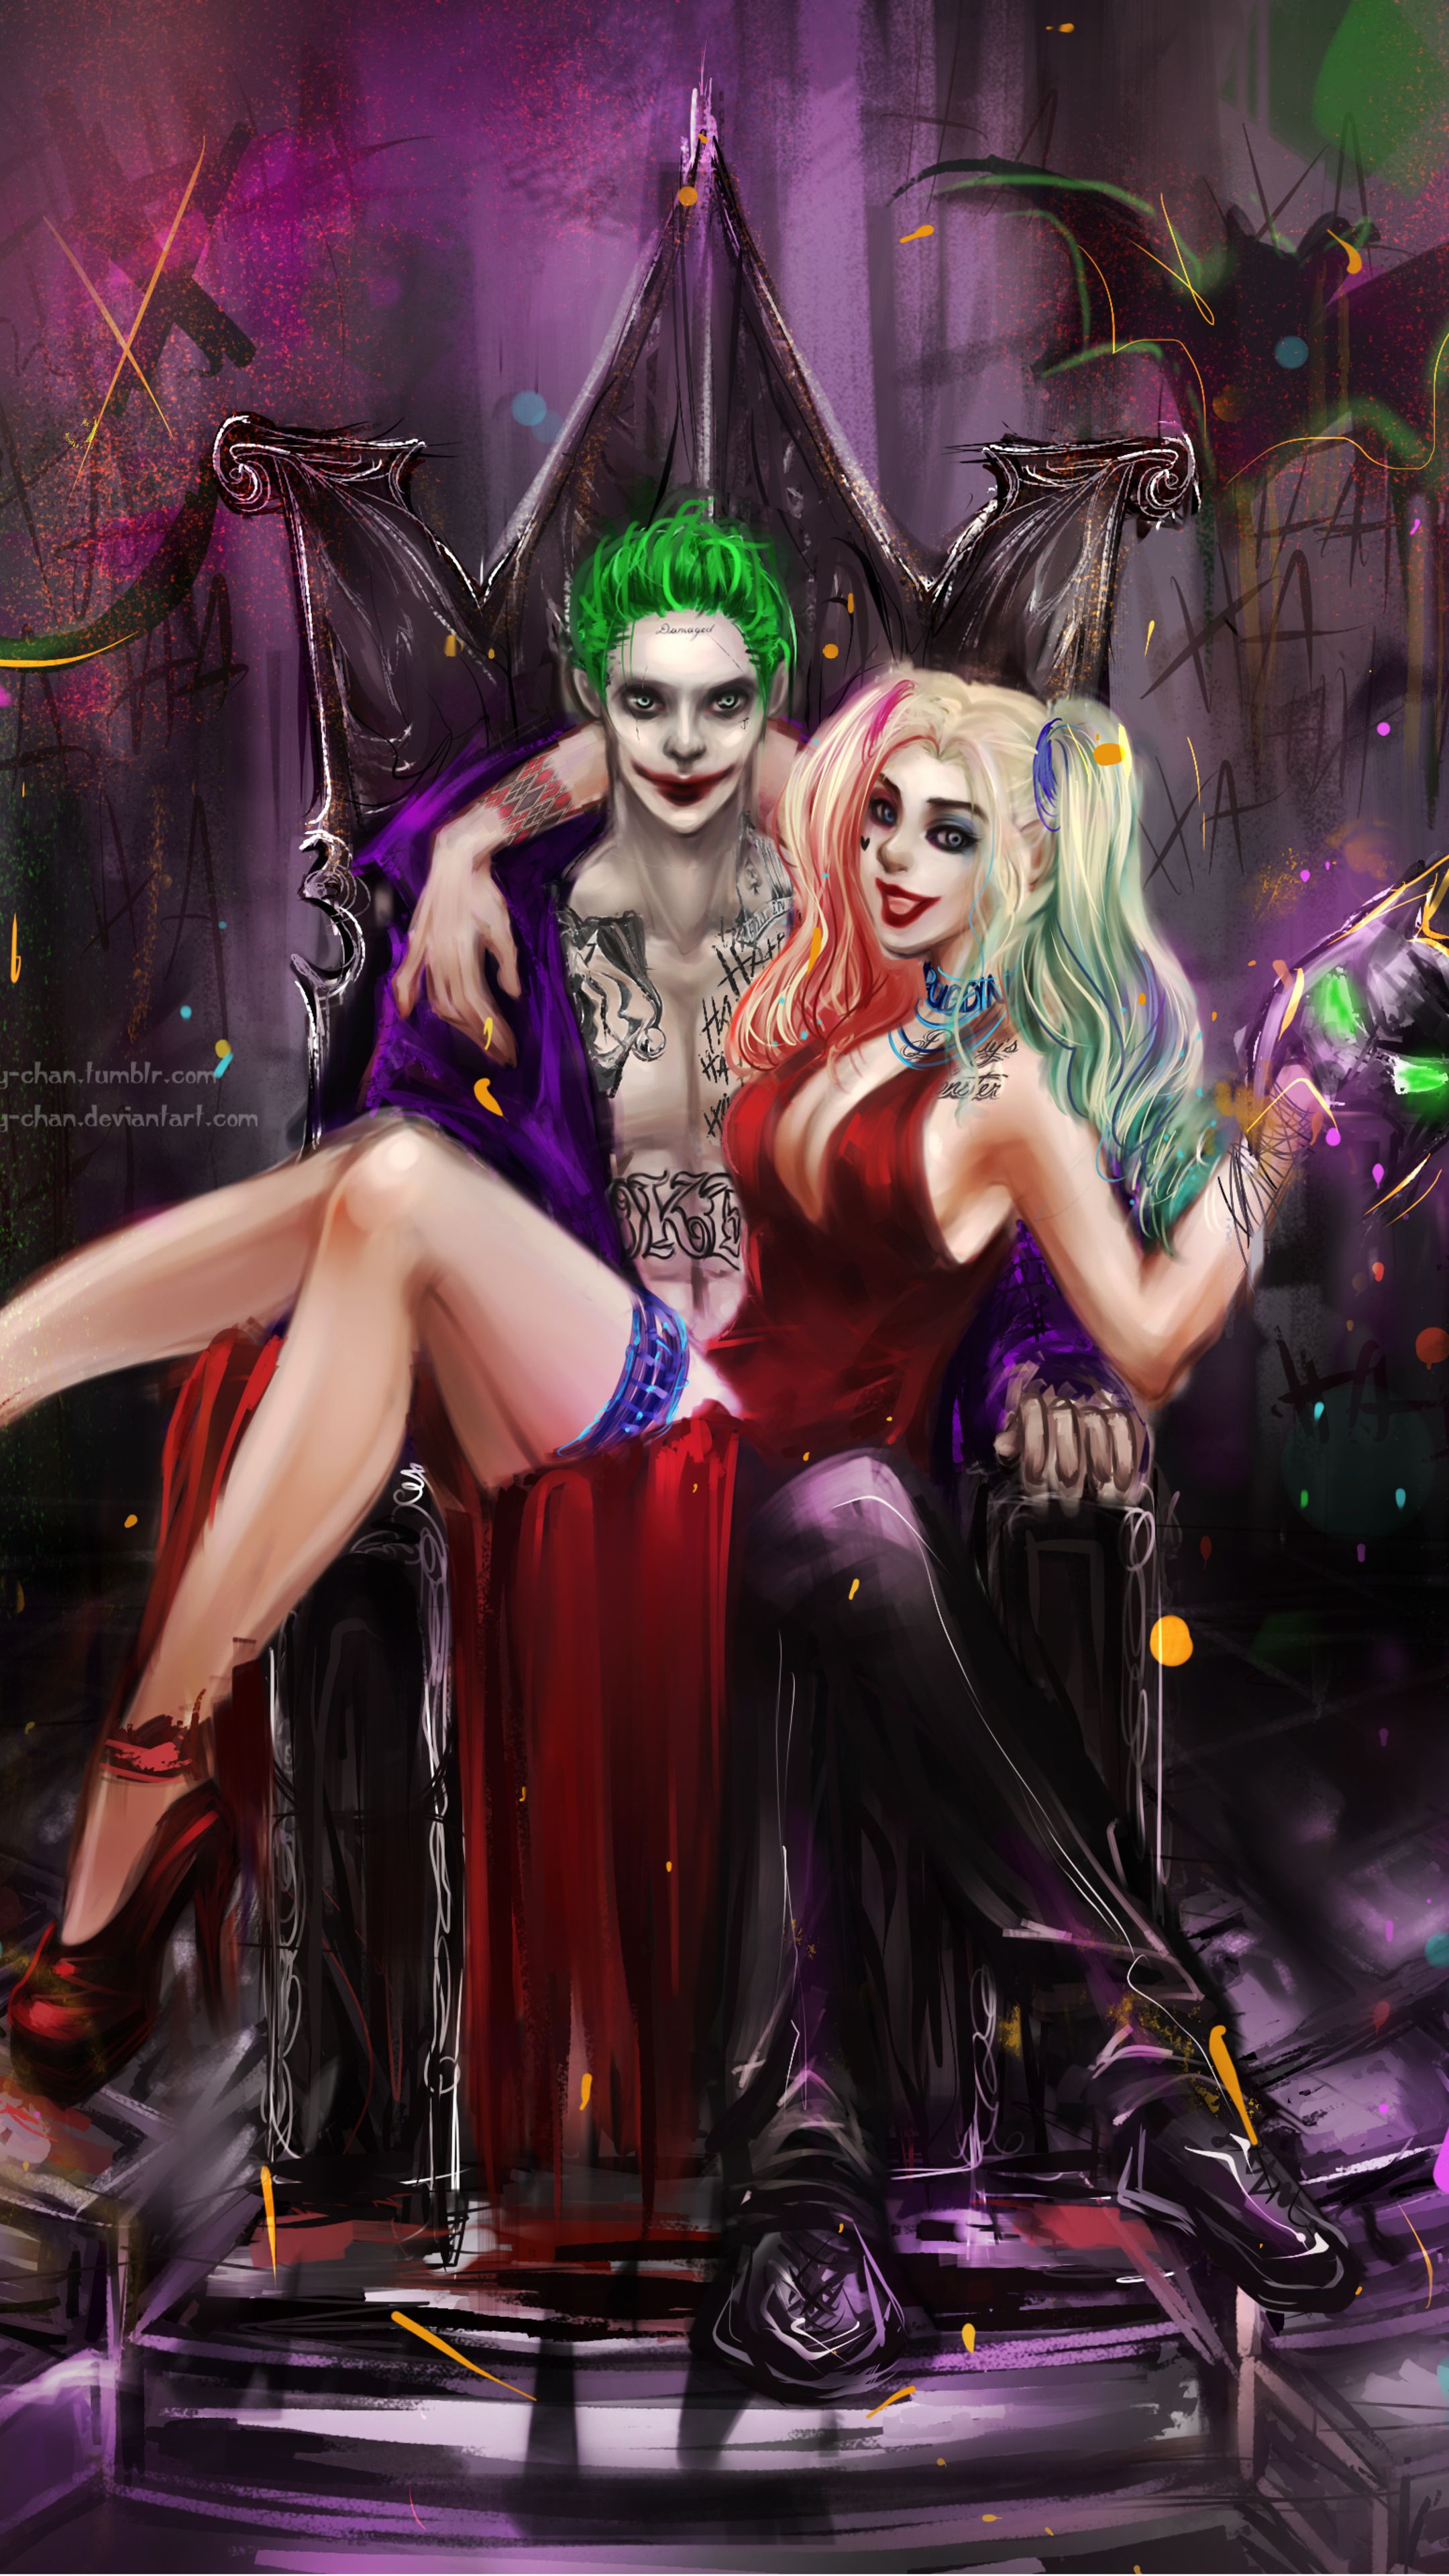 Joker Harley Quinn iPhone Wallpapers - Wallpaper Cave